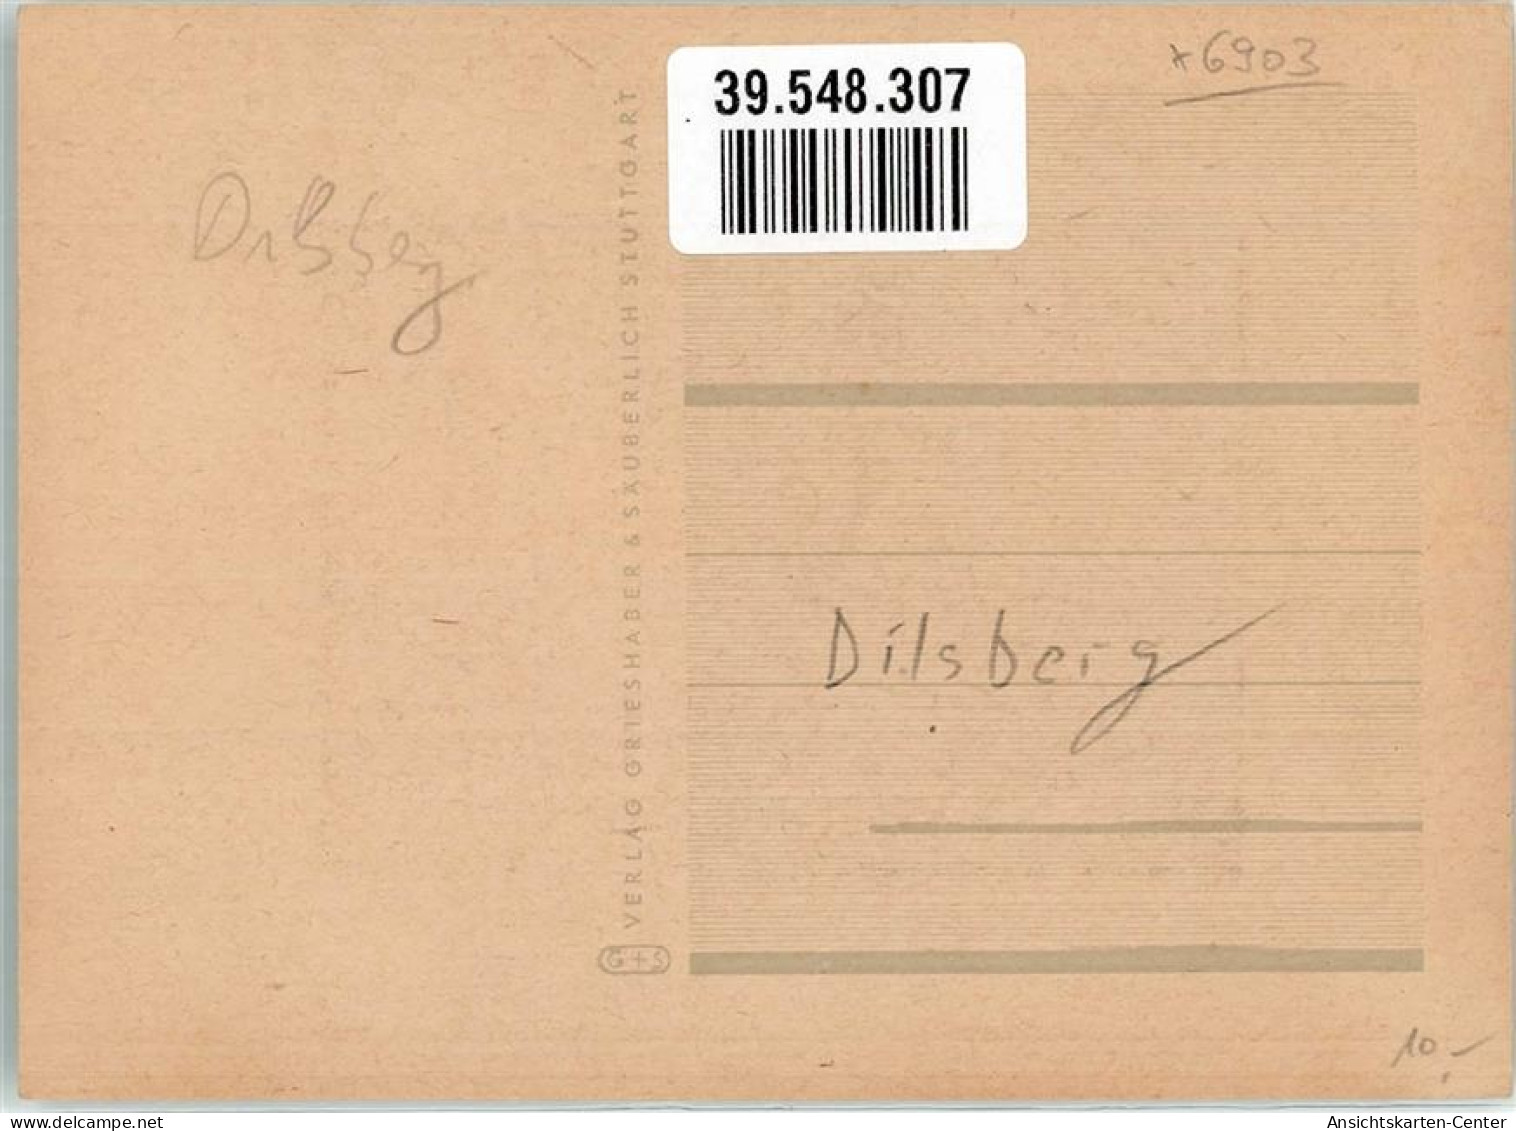 39548307 - Dilsberg - Neckargemuend